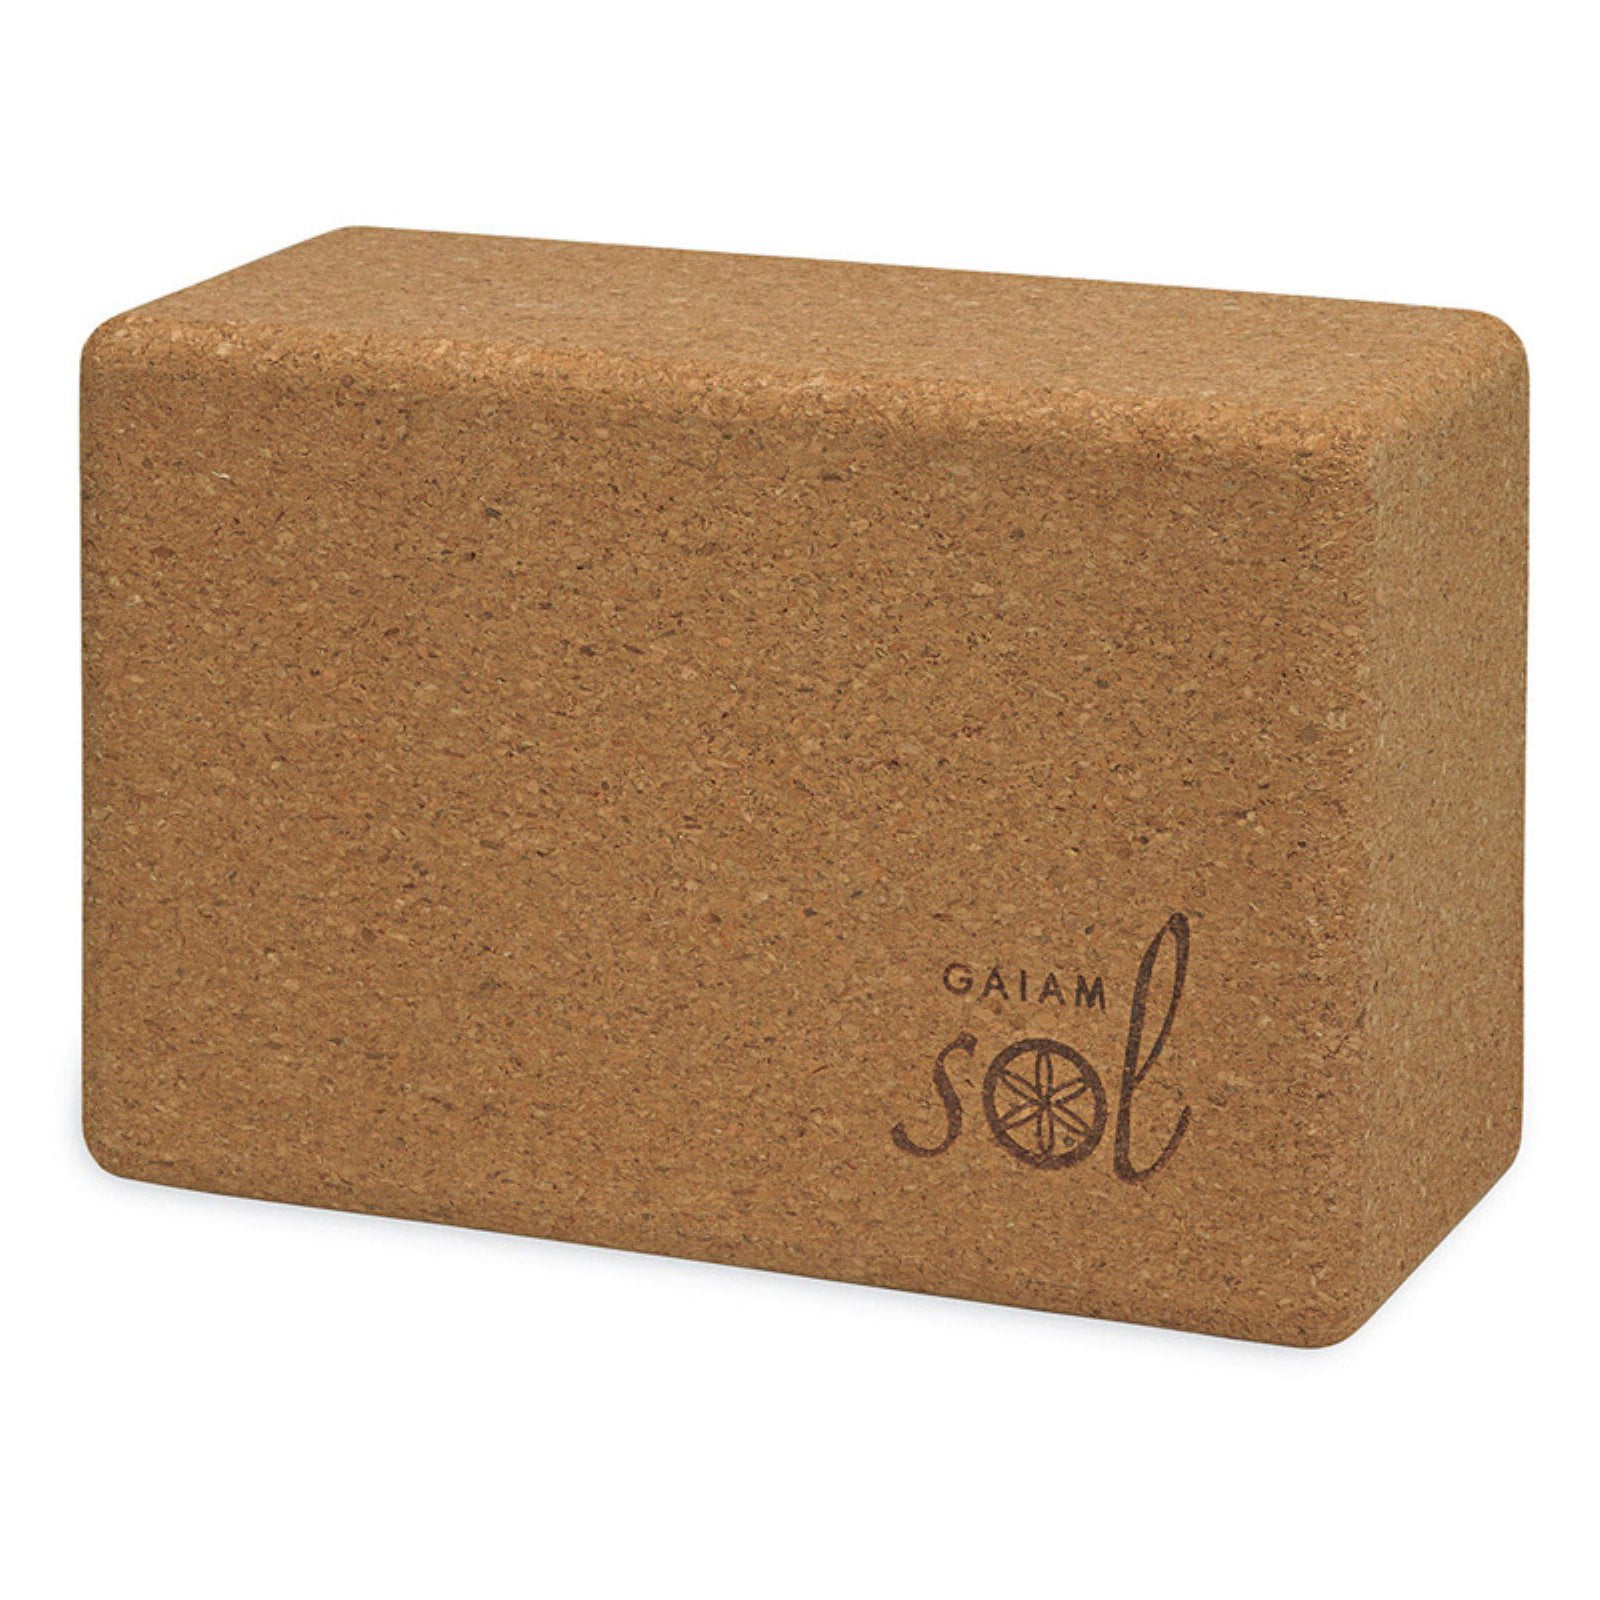 Odor-Resistant Lightweight 9x6x4 Yoga Blocks Non-Slip&Anti-Tilt for Women| Men Moisture-Proof Cork Yoga Block 2&1 with Yoga Strap-Natural Cork from Europe 